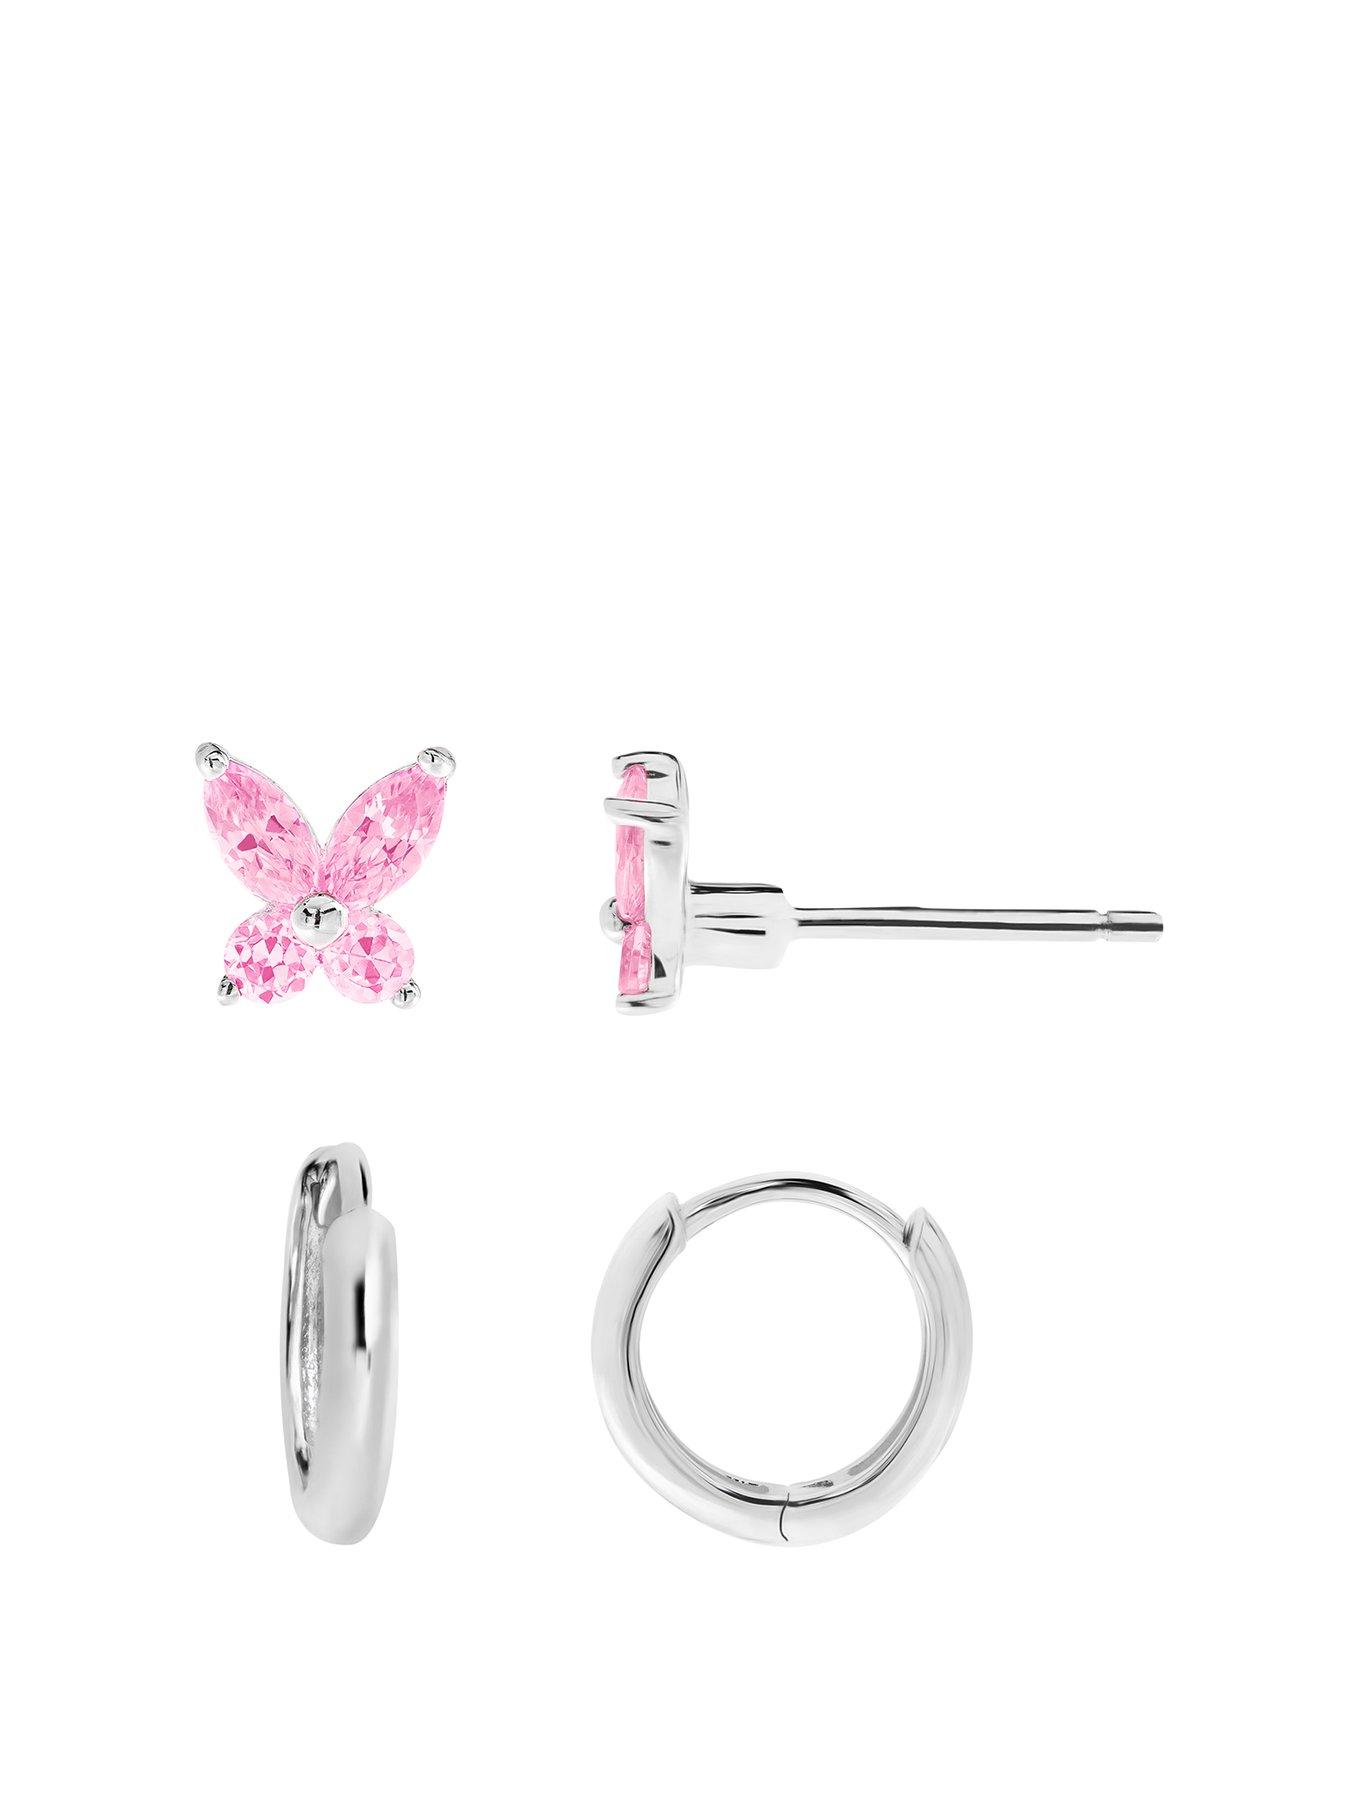 Kids Kids SterlIng Silver Pink Cubic Zirconia Butterfly Stud Earrings and 10mm Hoops Set